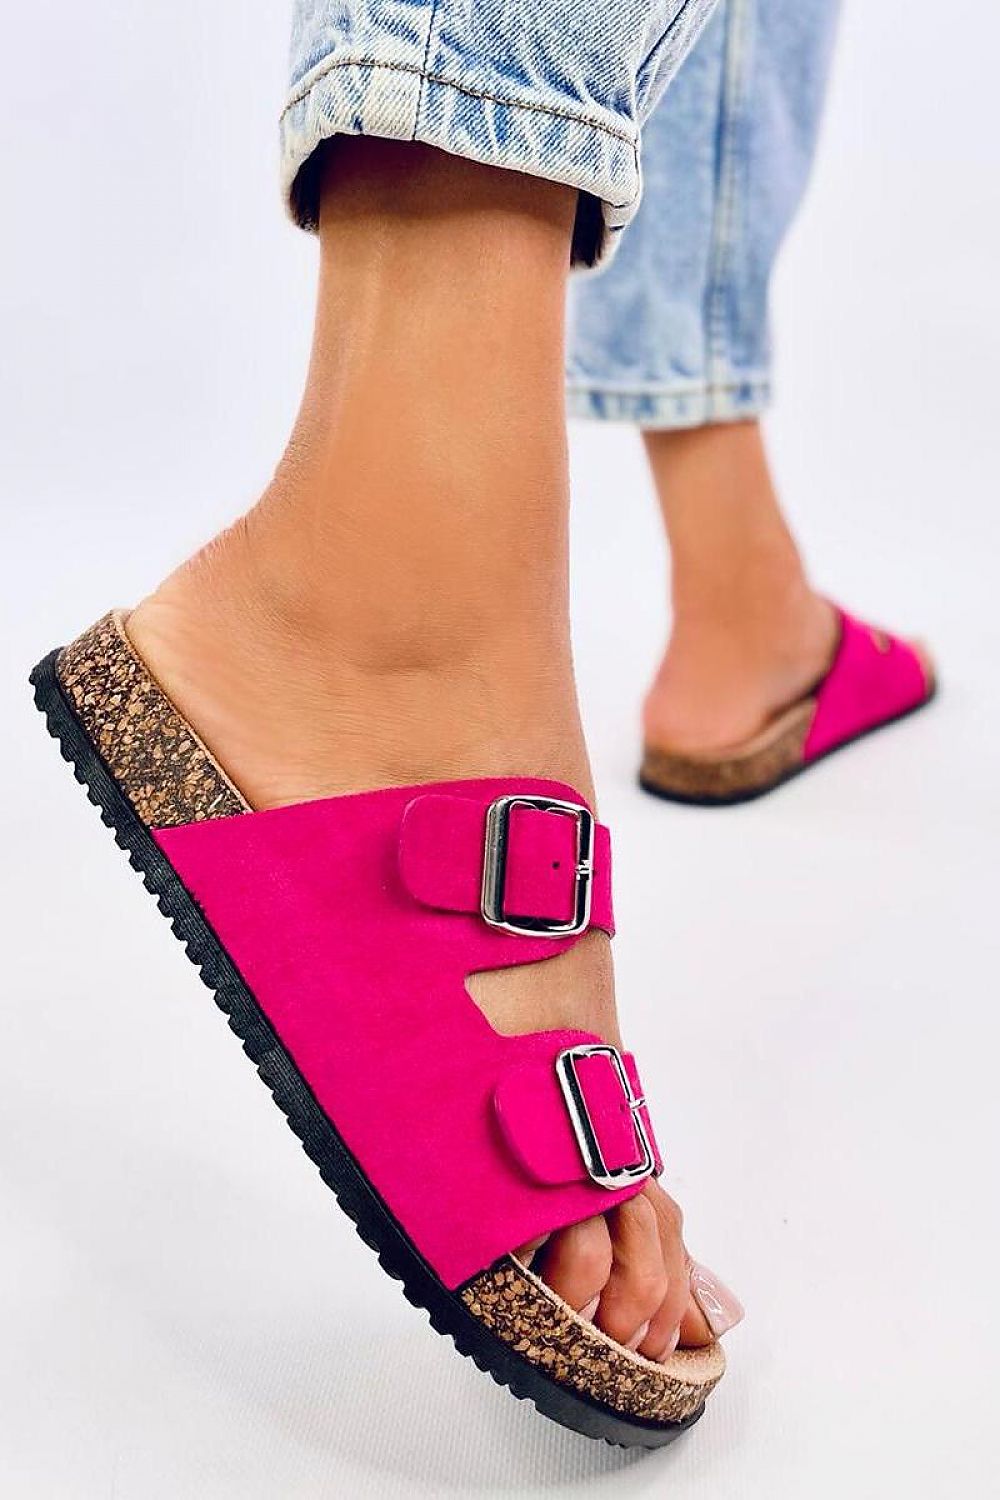 TEEK - Pink Double Buckle Cork Sole Sandals SHOES TEEK MH   